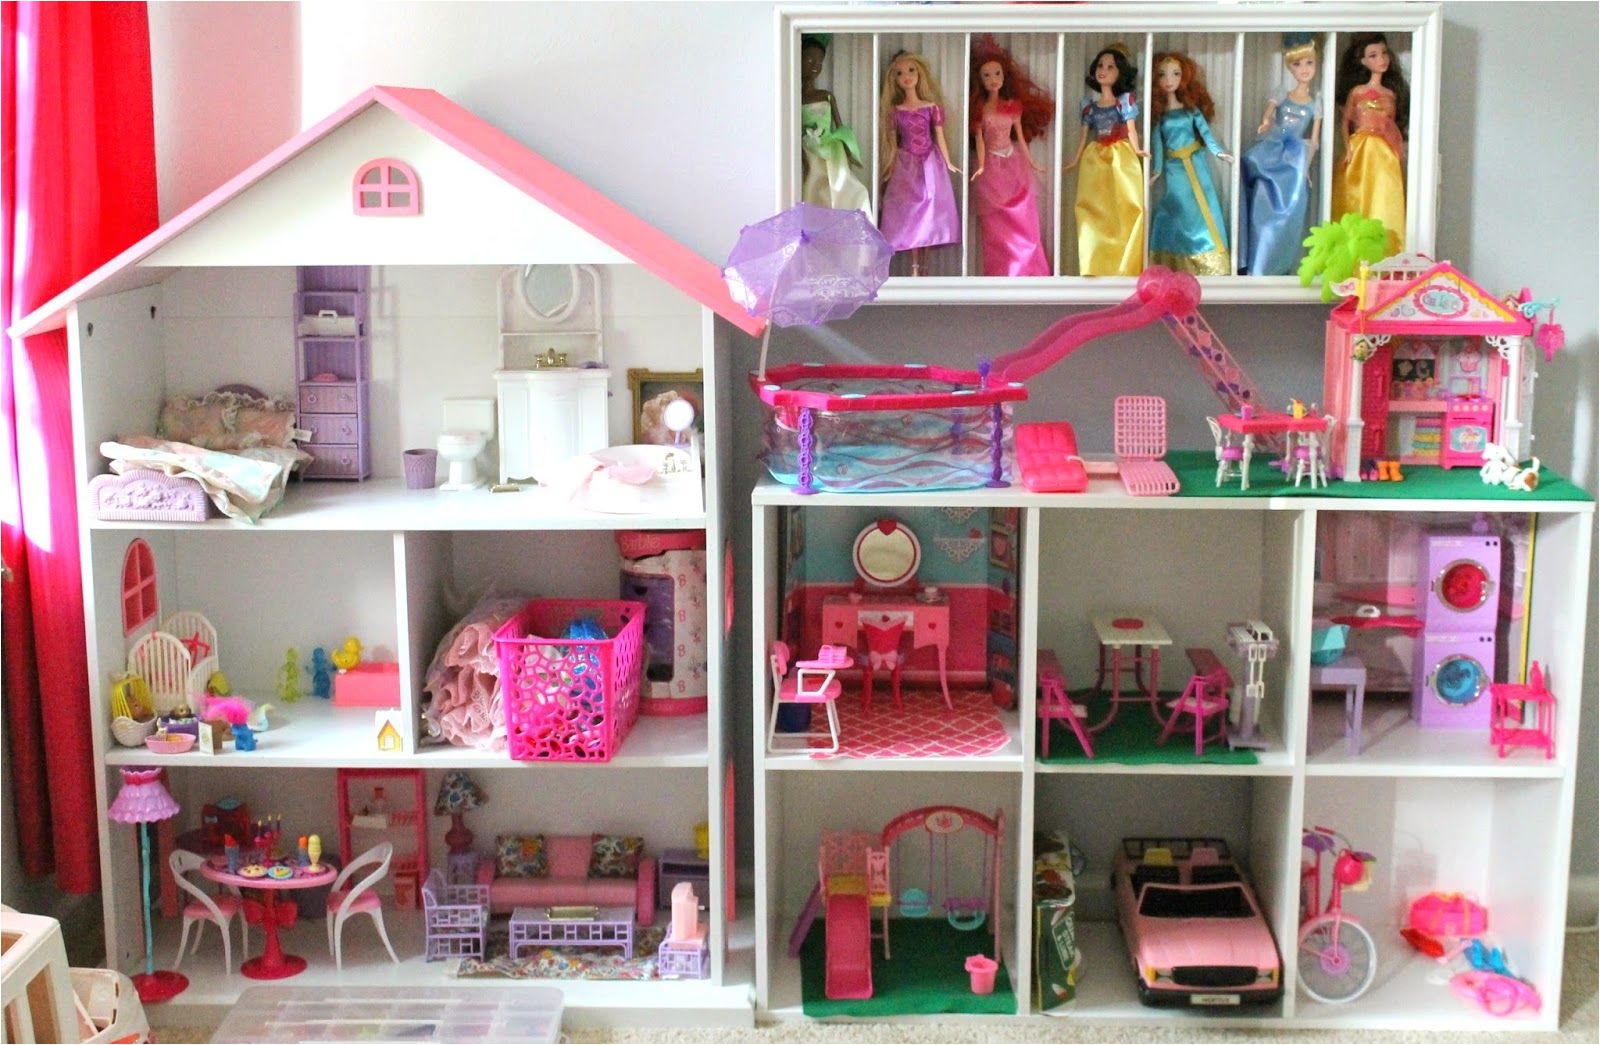 diy barbie house using a bookshelf and cube shelf from target